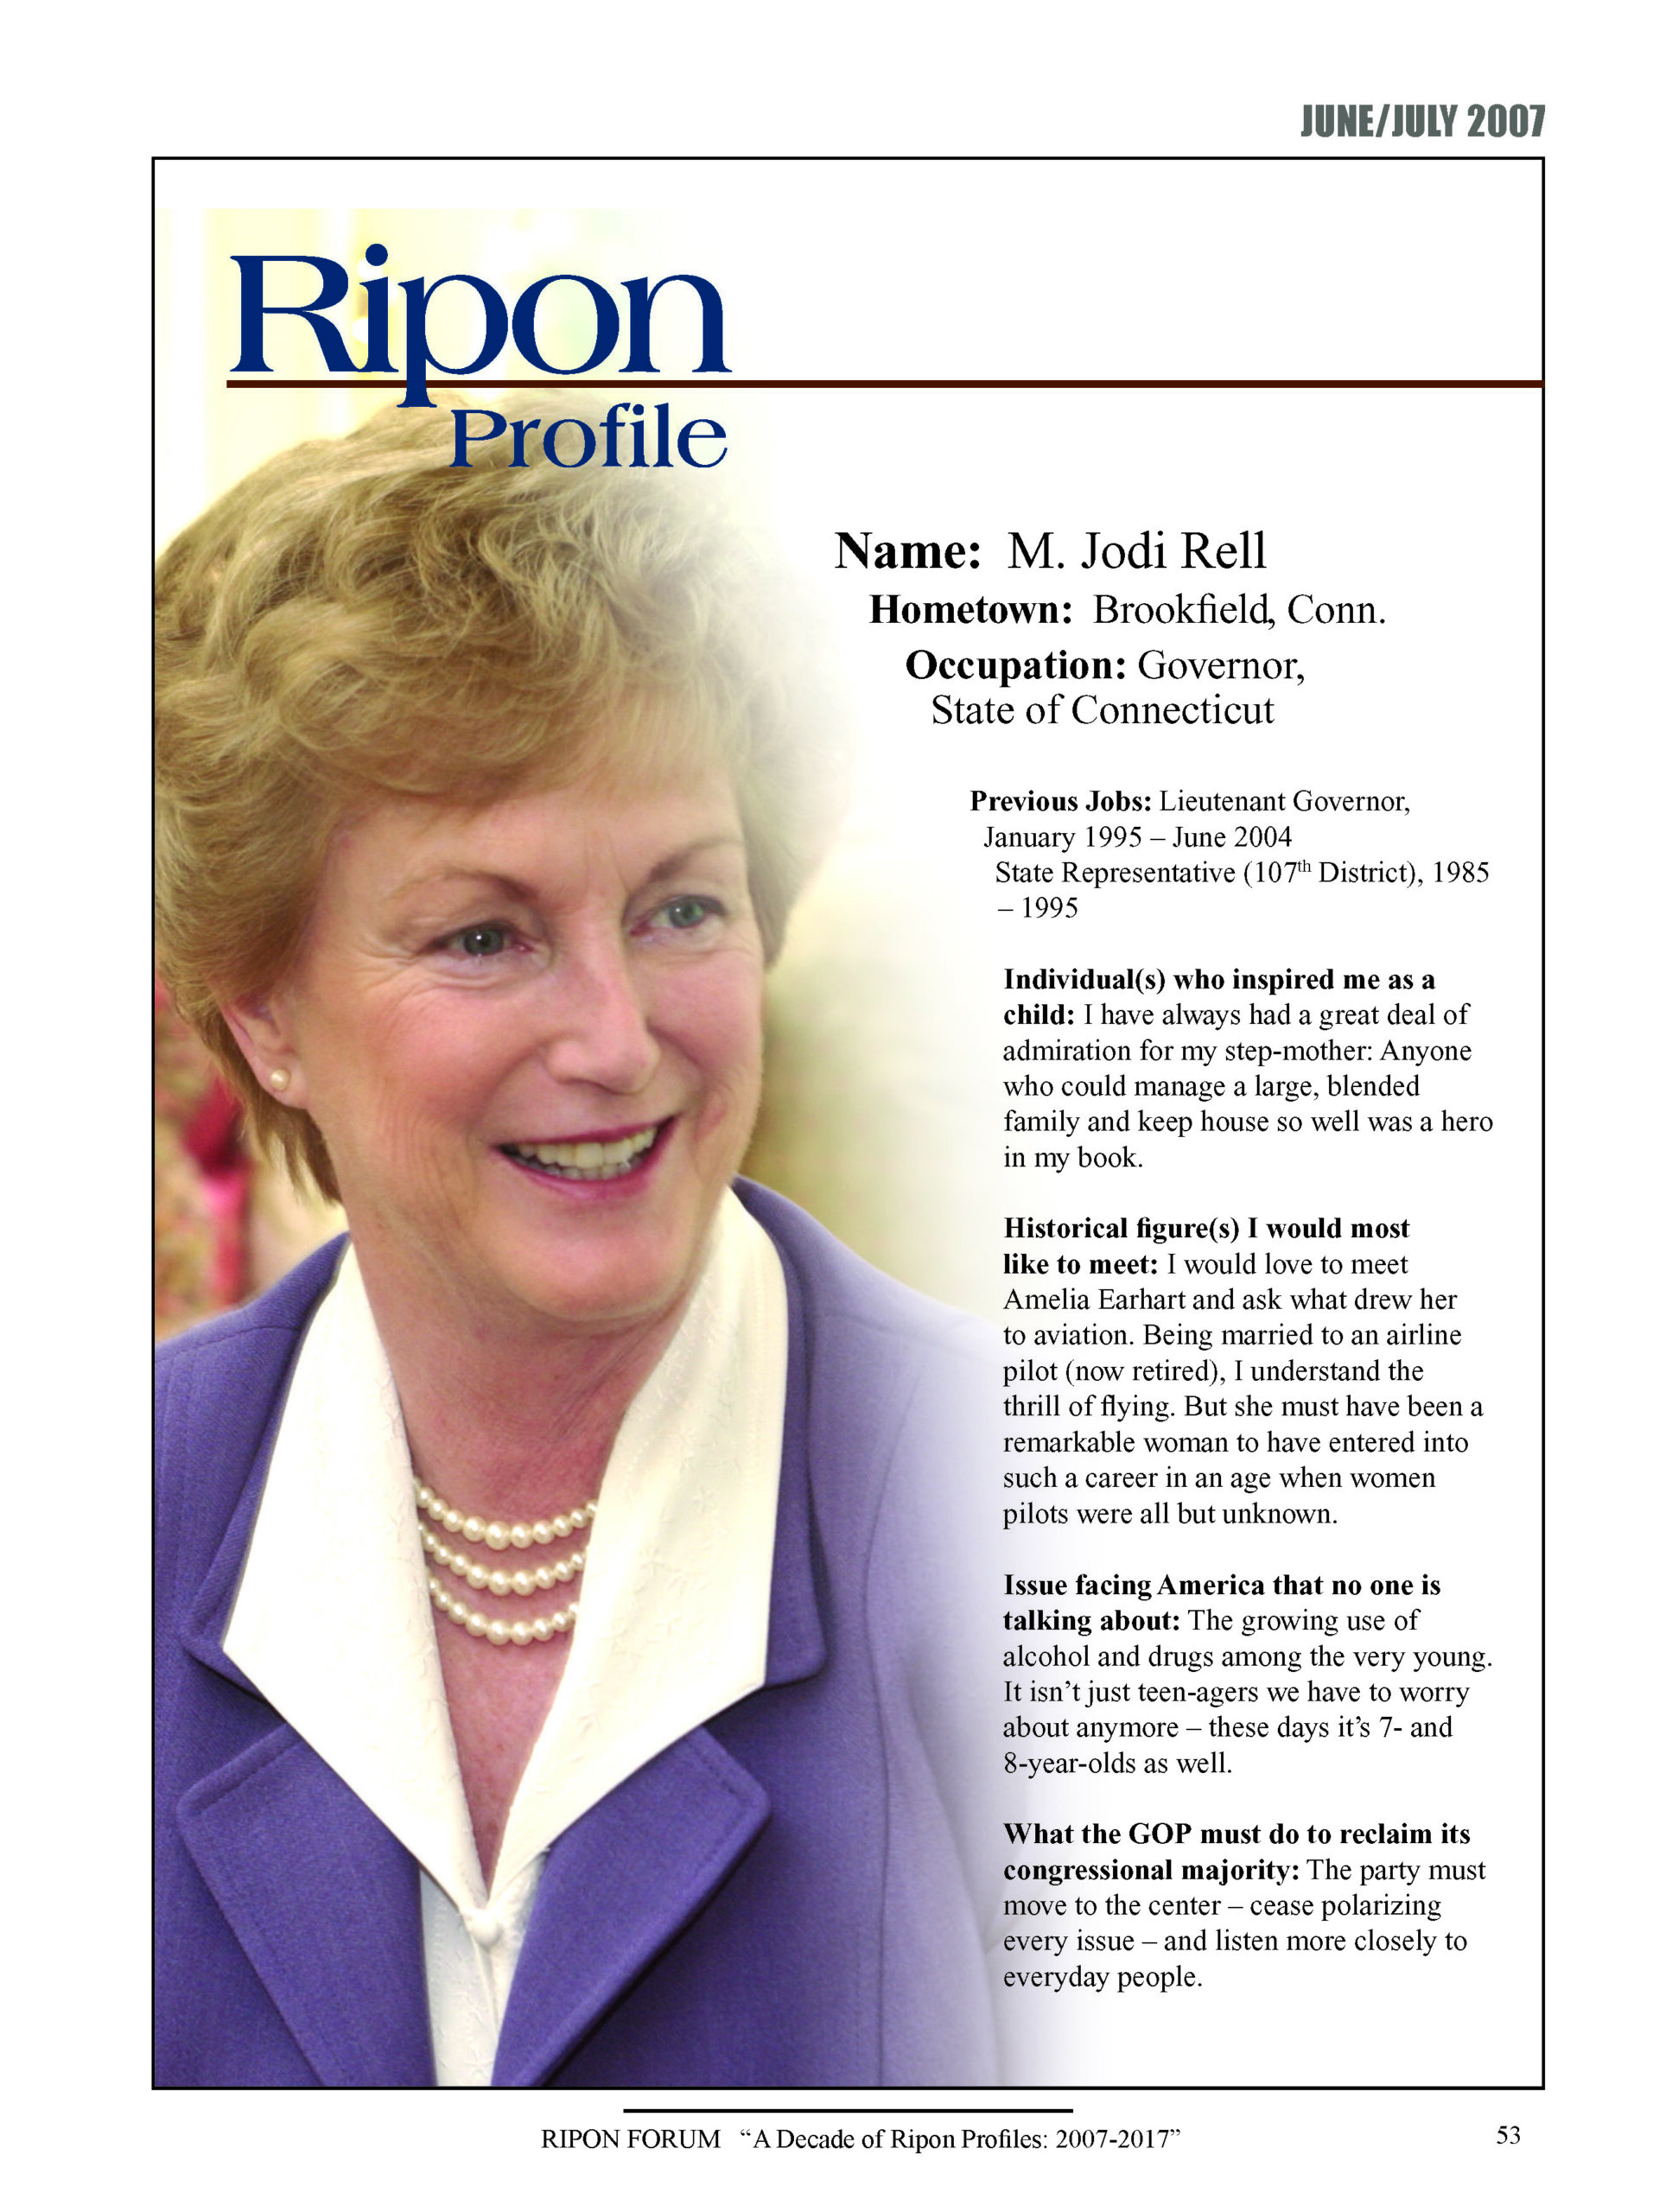 Ripon Profile of Jodi Rell